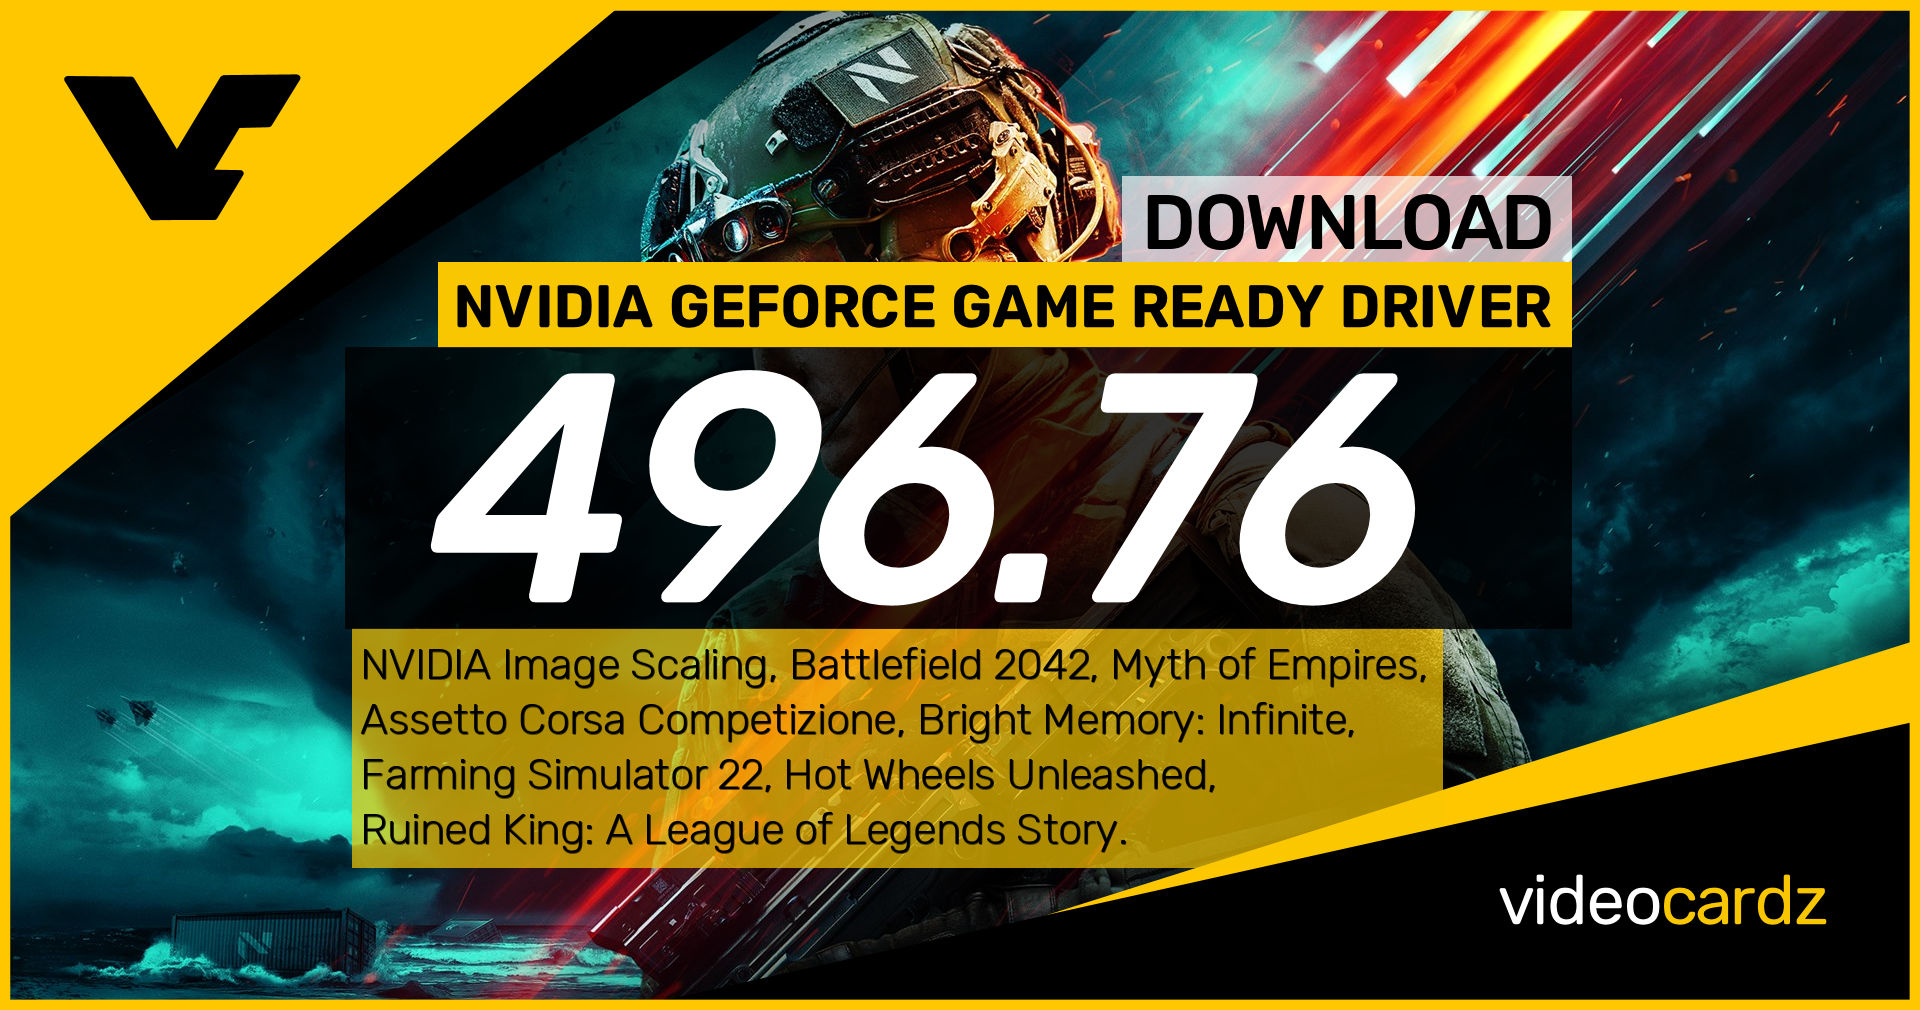 nvidia geforce gtx 960m driver download